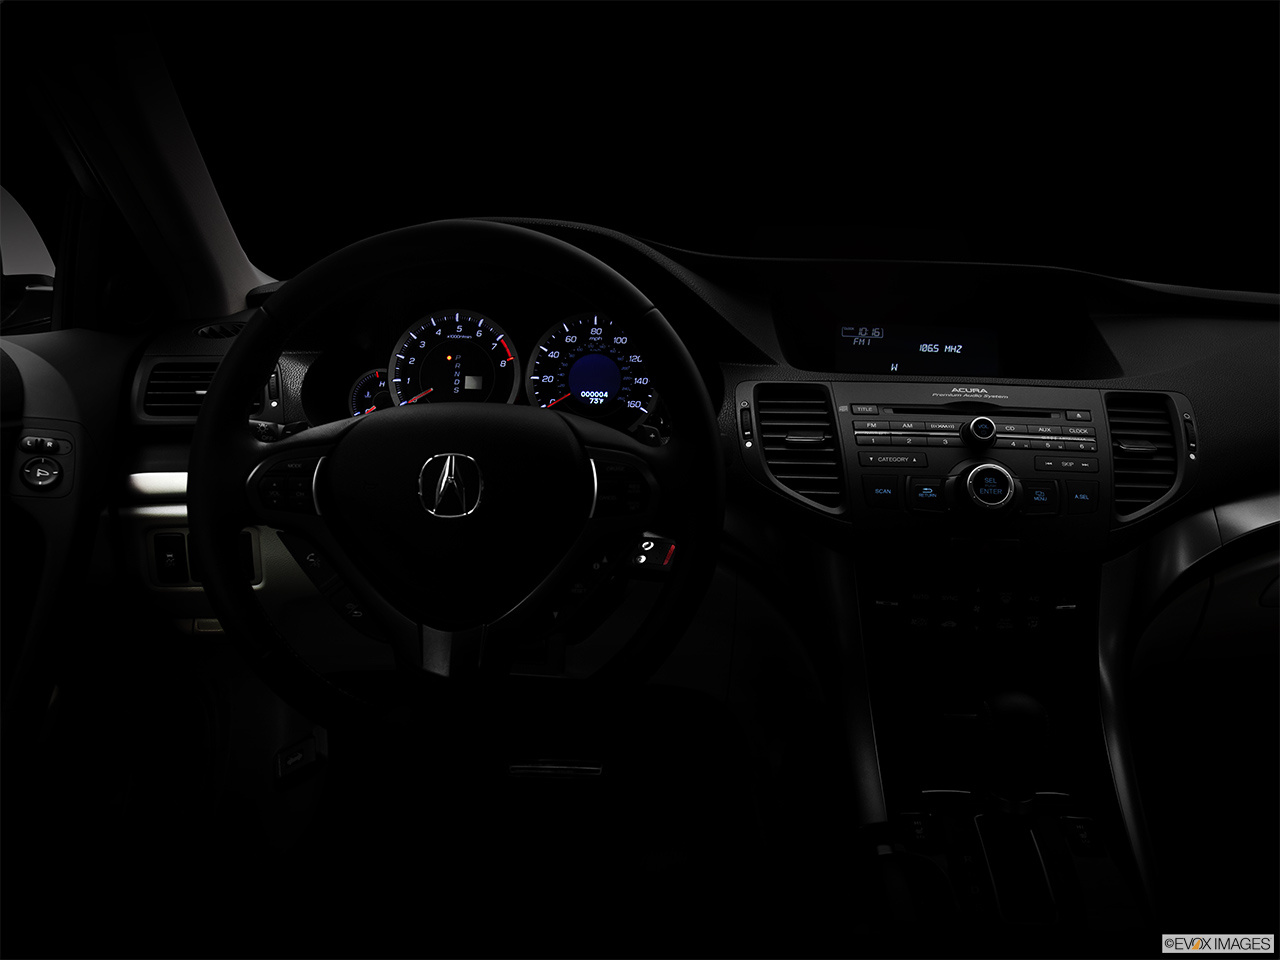 2012 Acura TSX Base Centered wide dash shot - "night" shot. 